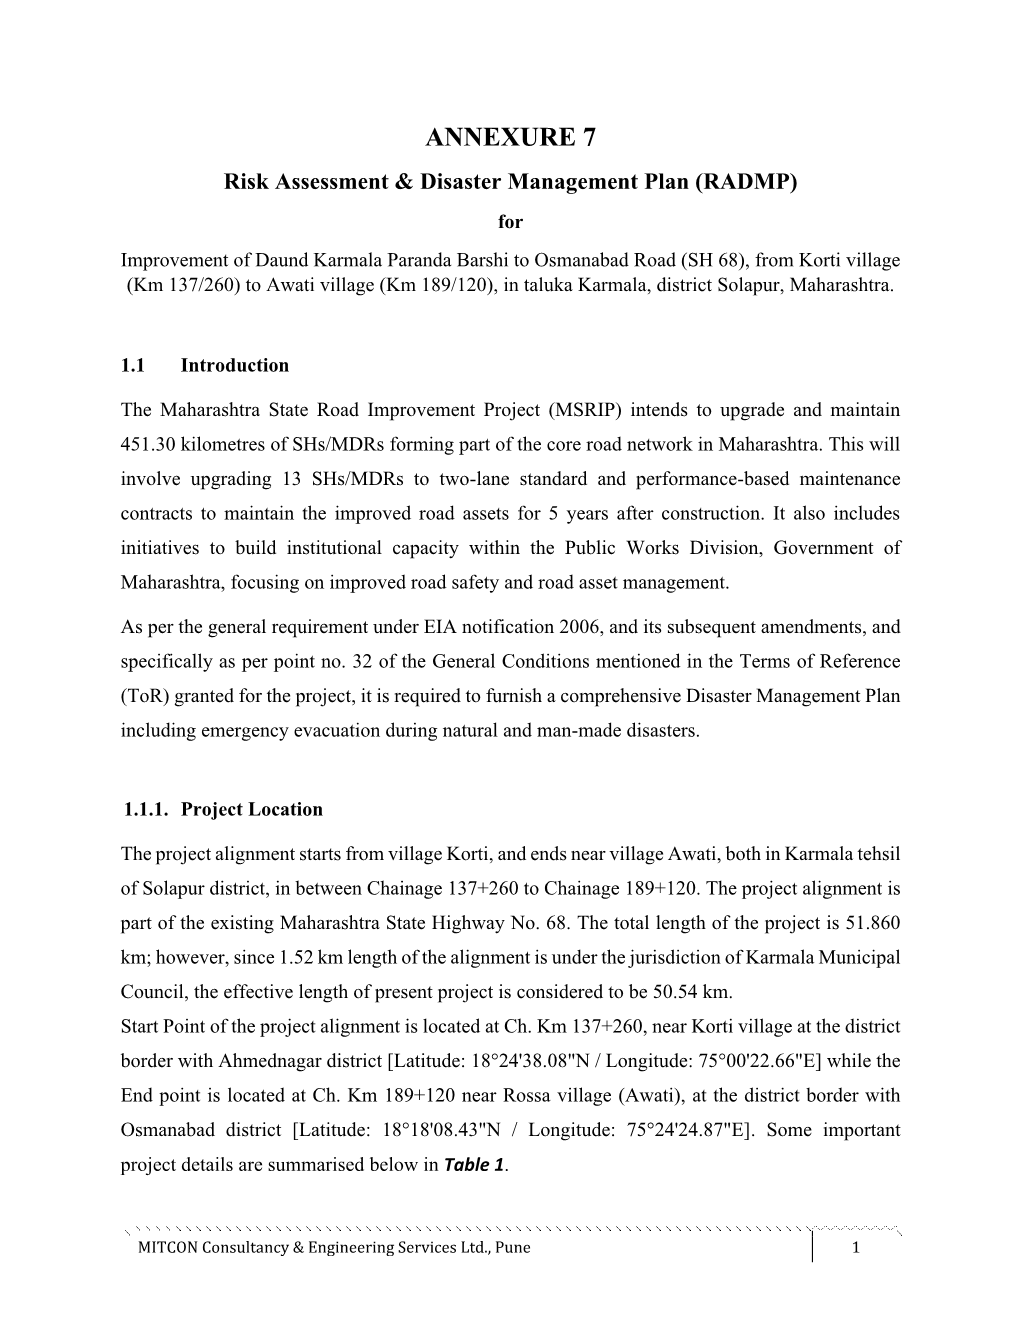 ANNEXURE 7 Risk Assessment & Disaster Management Plan (RADMP)